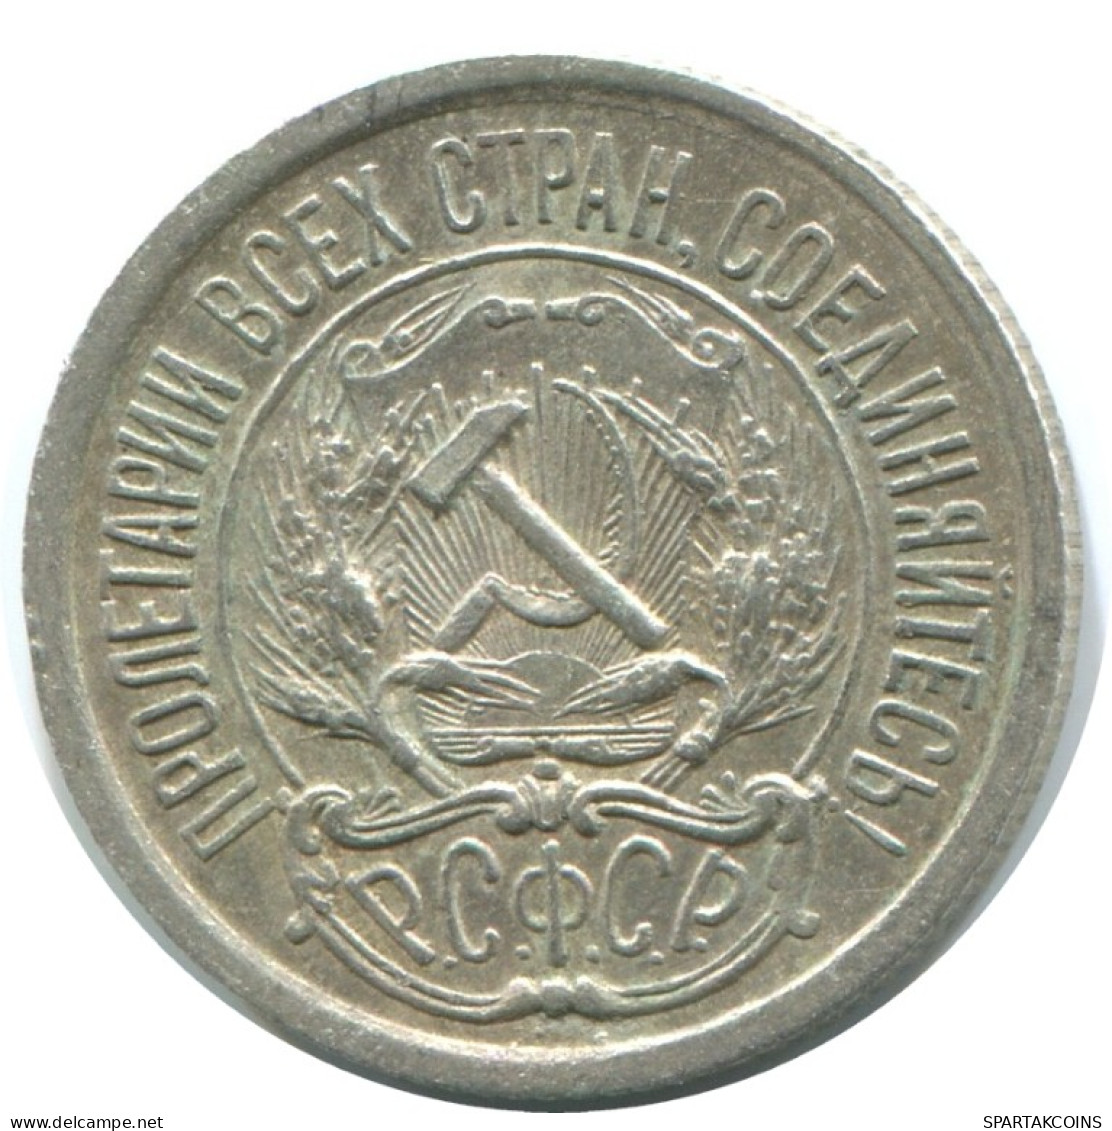 10 KOPEKS 1923 RUSSIA RSFSR SILVER Coin HIGH GRADE #AE952.4.U.A - Russie